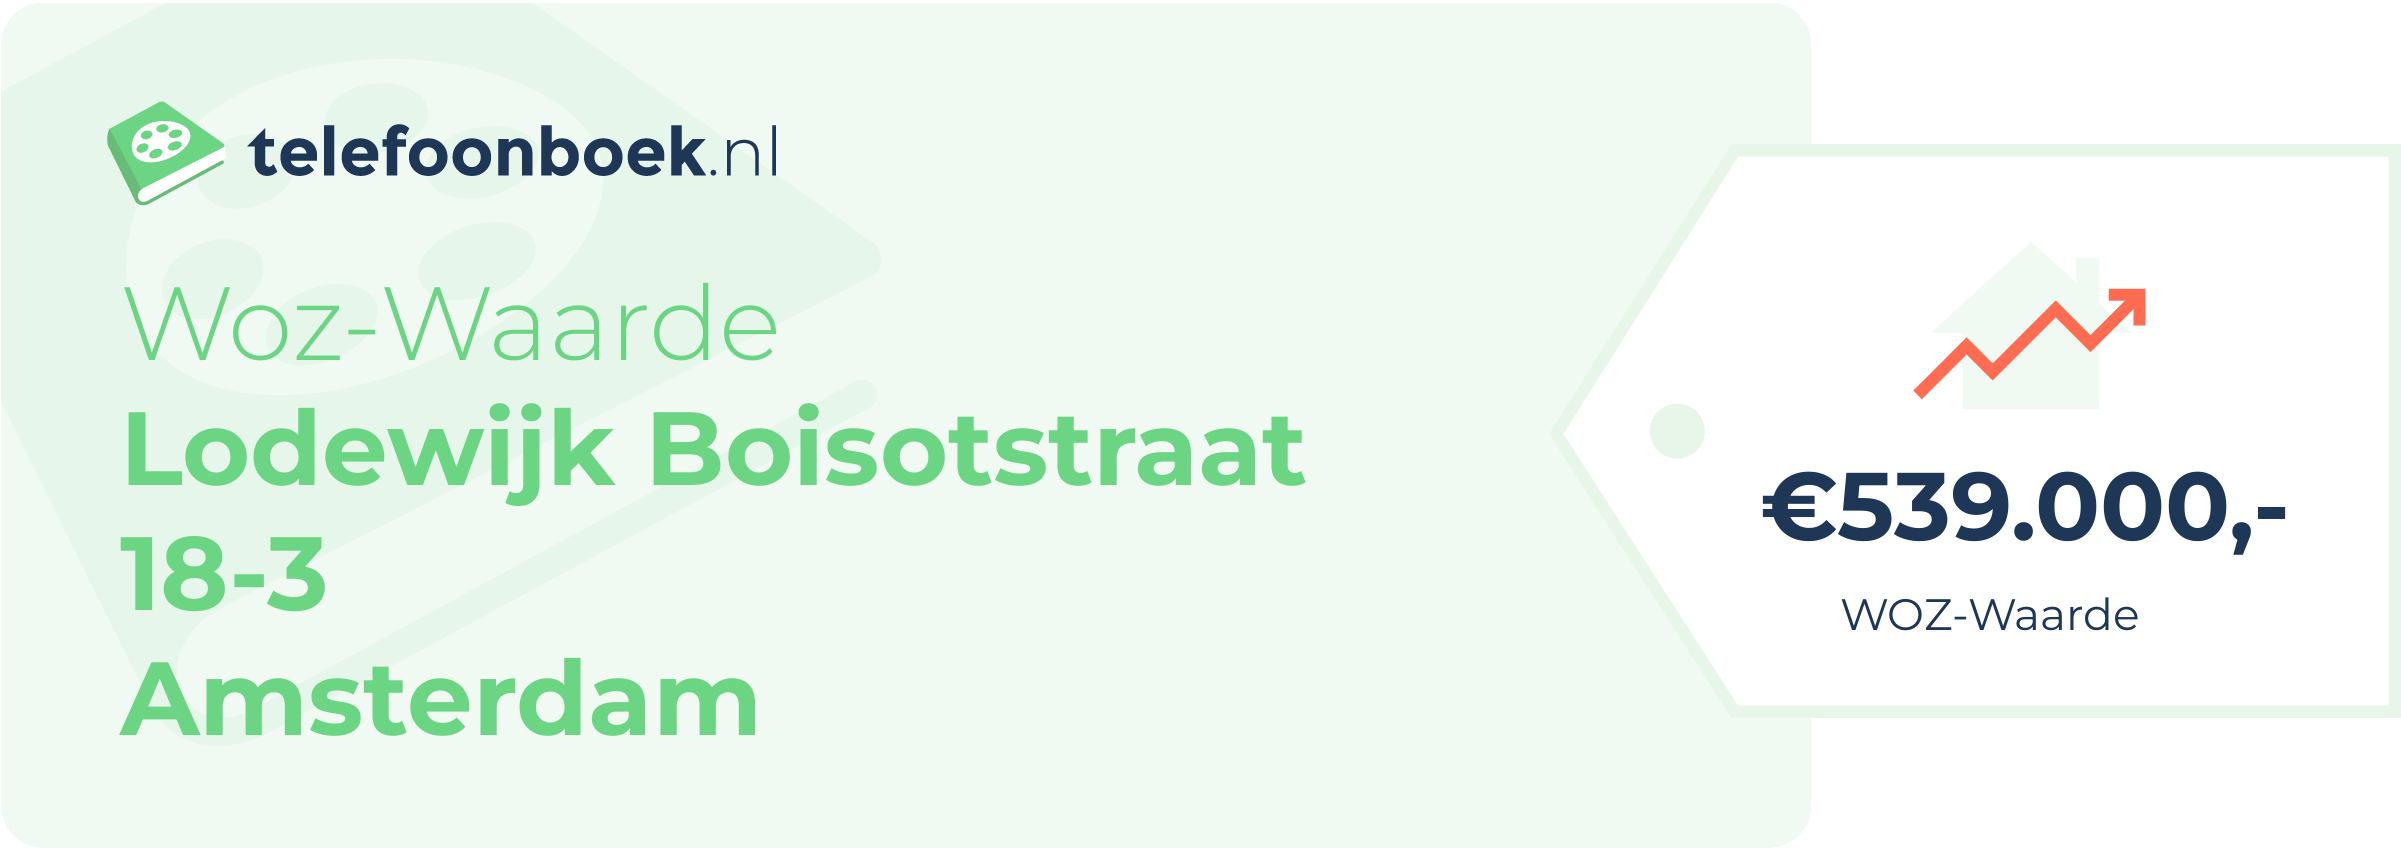 WOZ-waarde Lodewijk Boisotstraat 18-3 Amsterdam